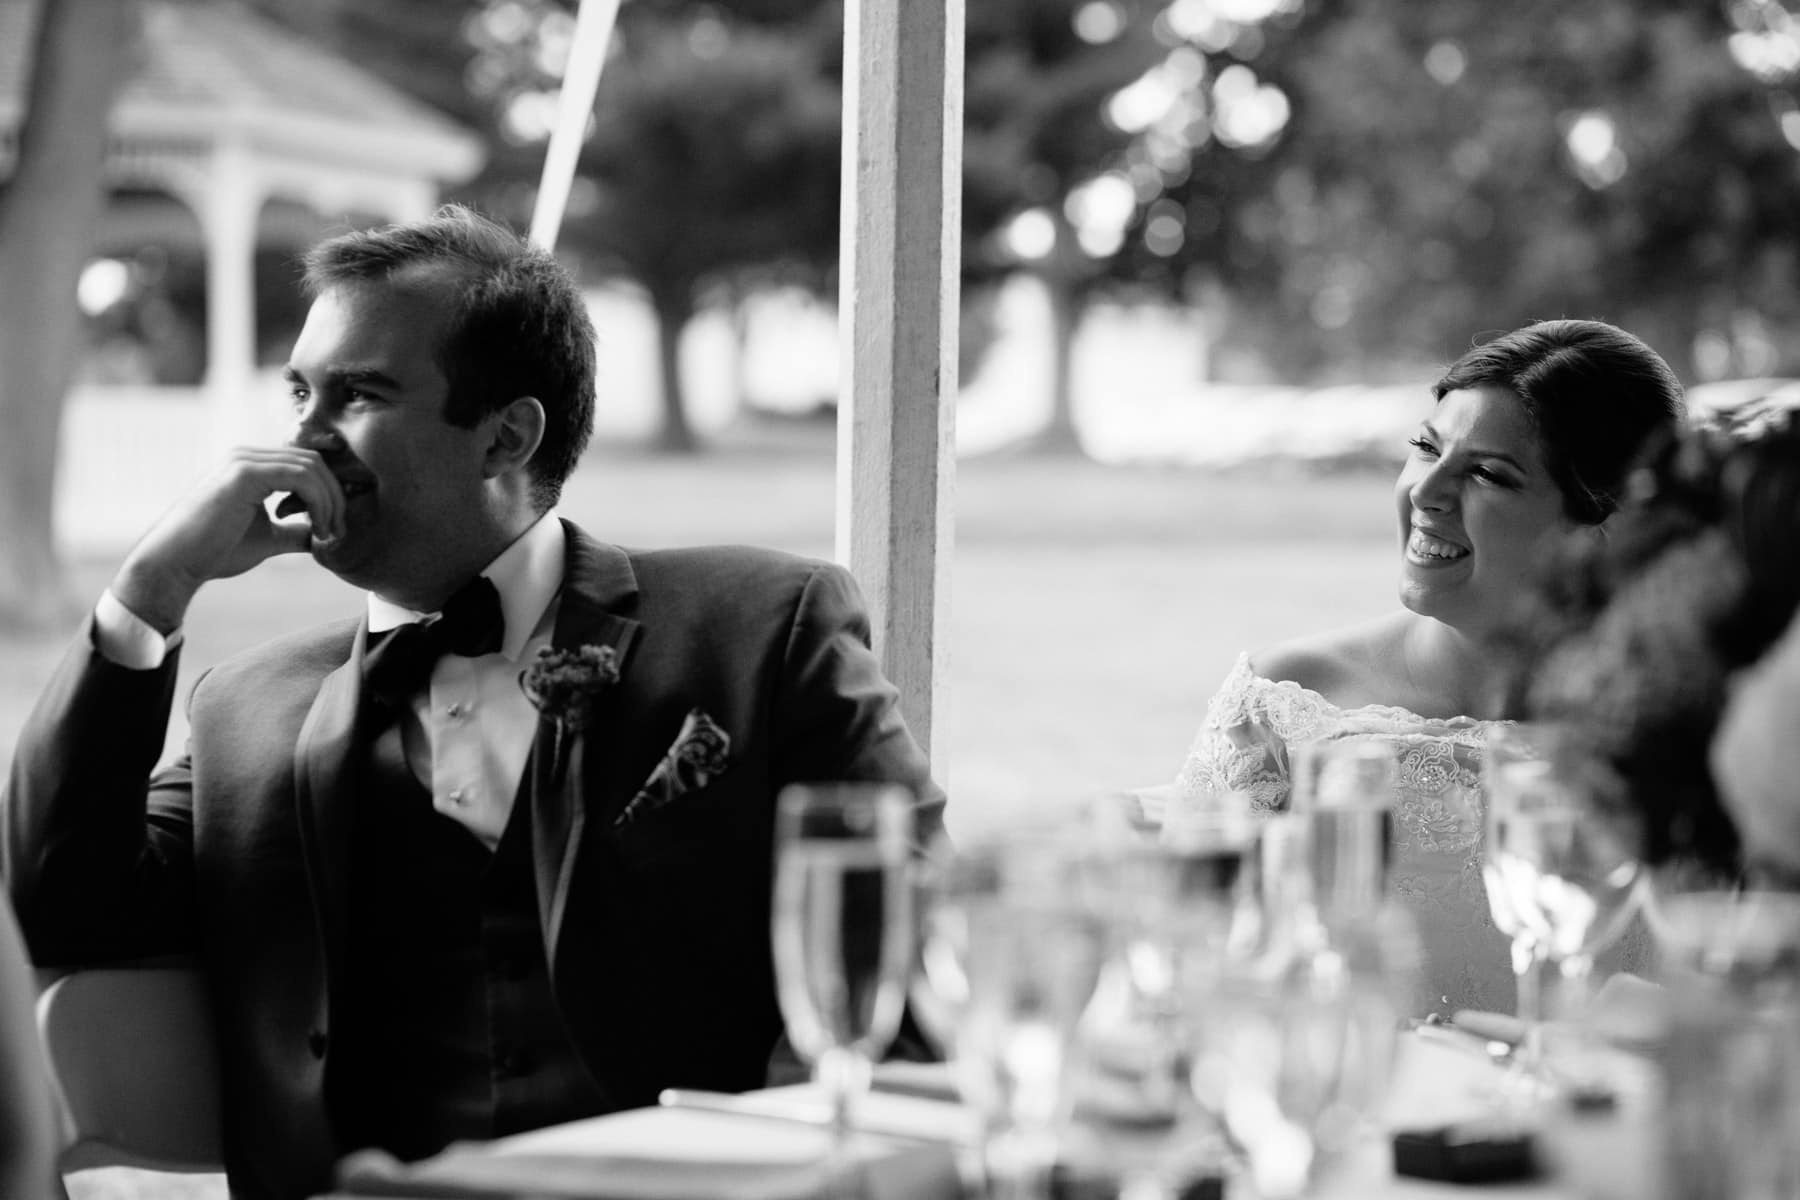 Maggie and Tom's wedding at the Endicott Estate in Dedham, MA | Kelly Benvenuto Photography | Boston Wedding Photographer